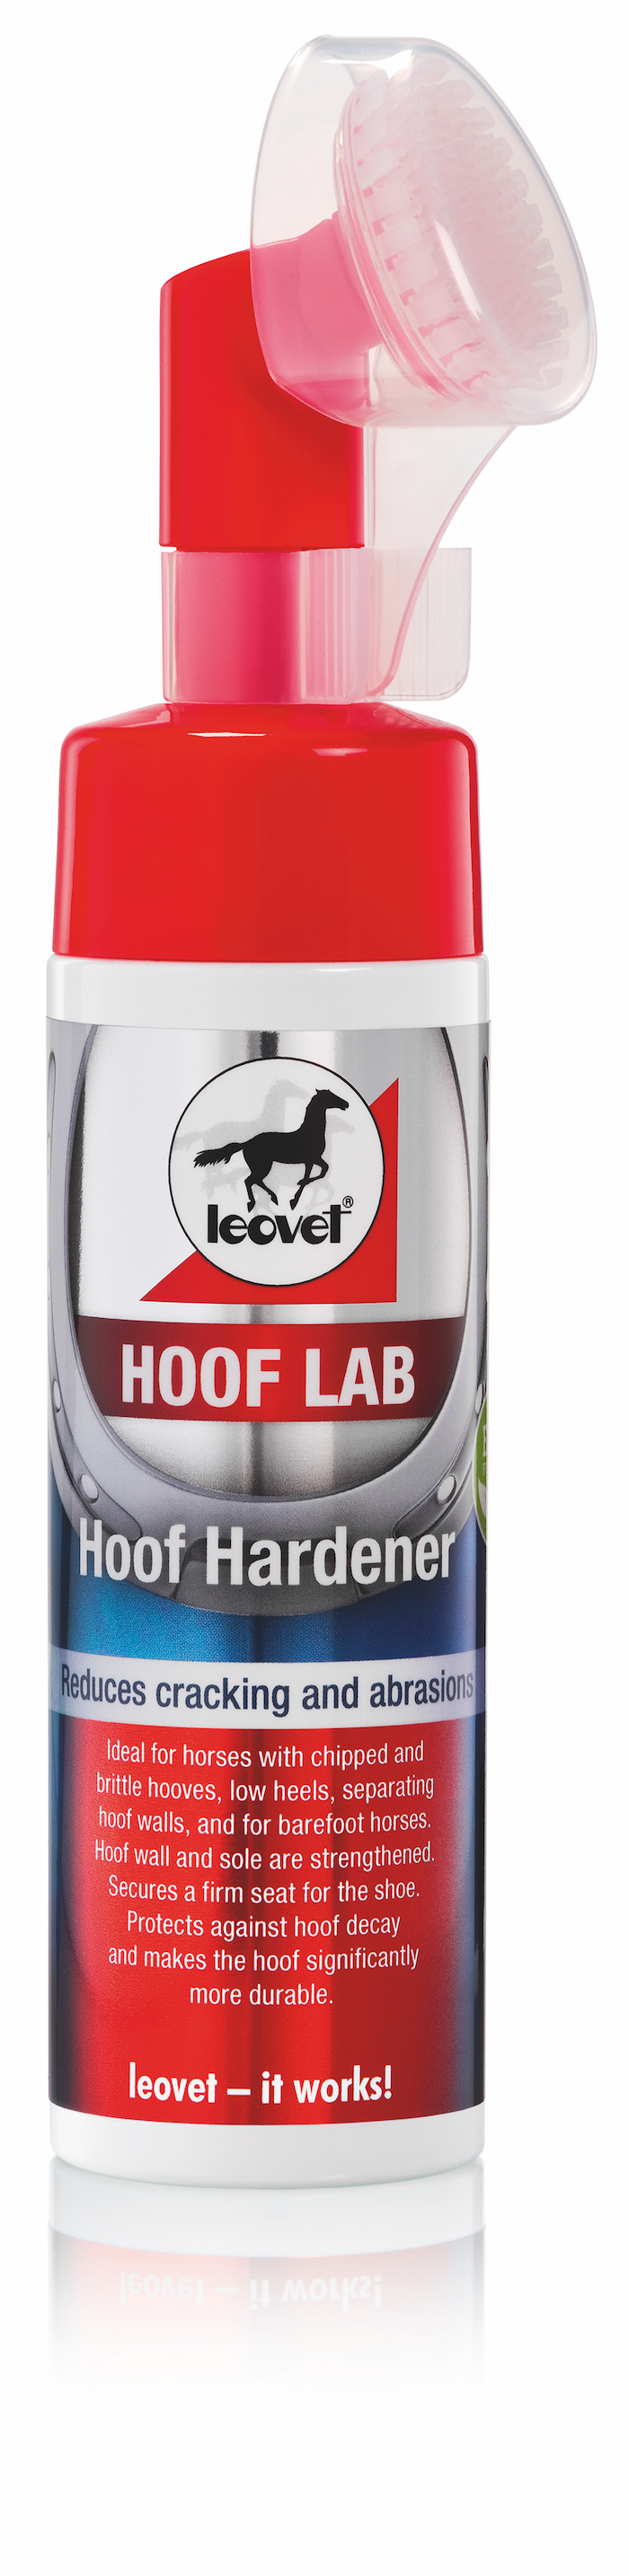 Leovet HOOF LAB Hoof Hardener_0318 copy